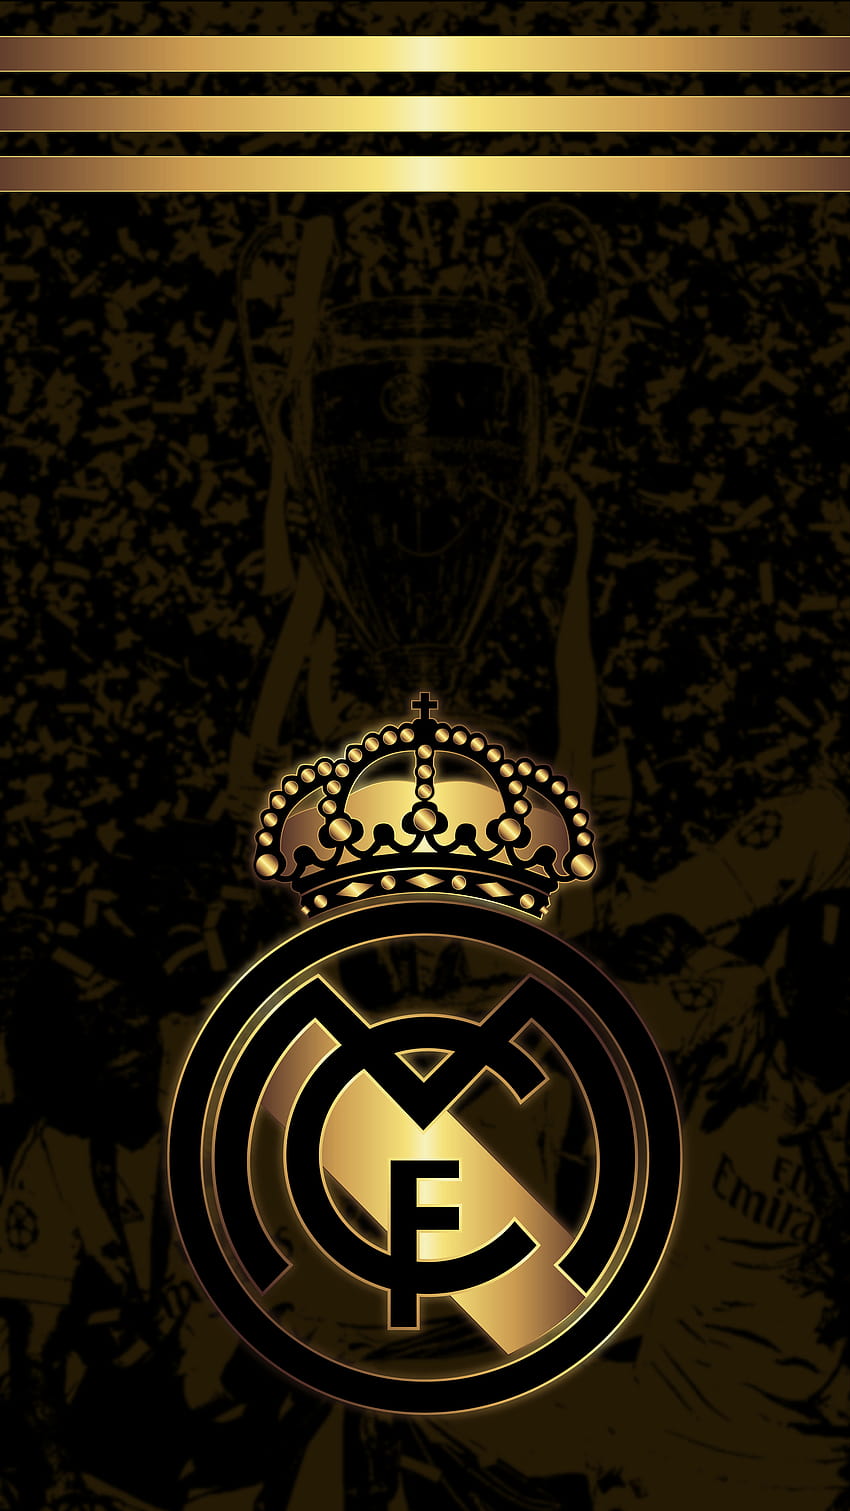 Design Real Madrid on Dog, logotipo real madrid 2021 Papel de parede de celular HD